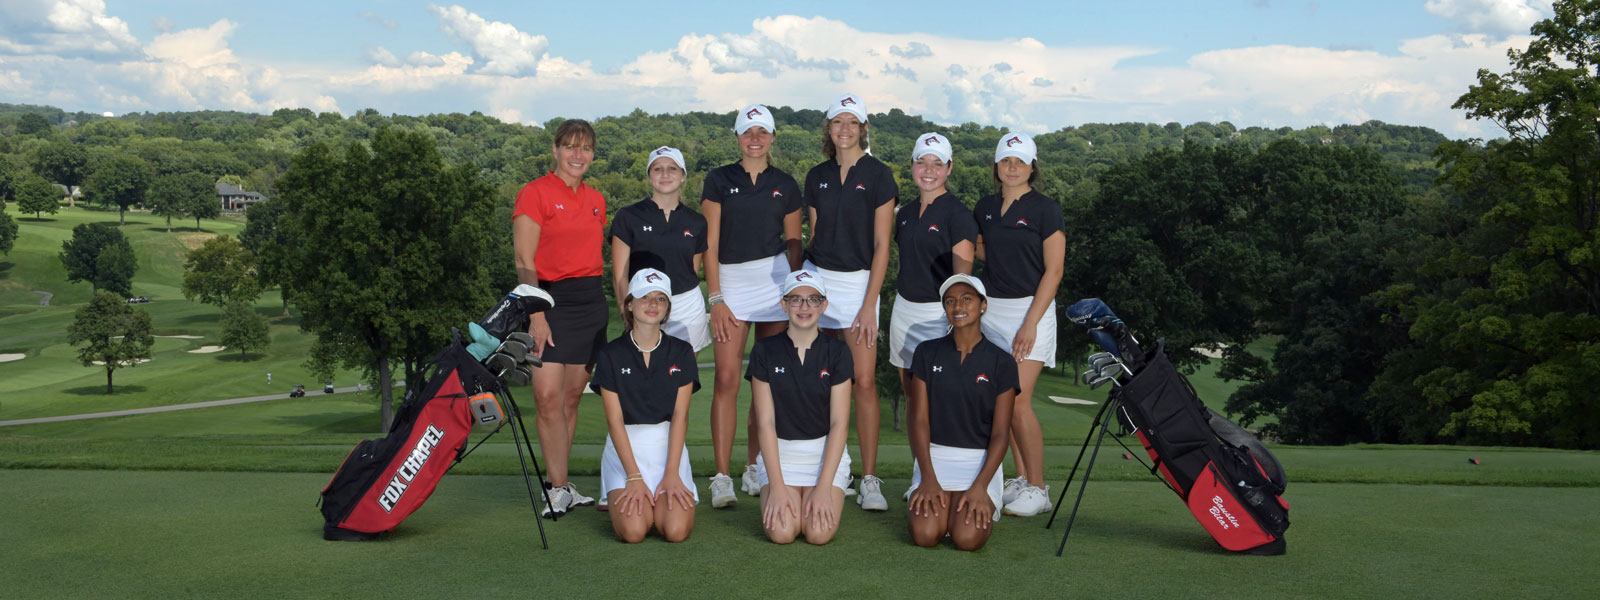 Girls' Golf Team